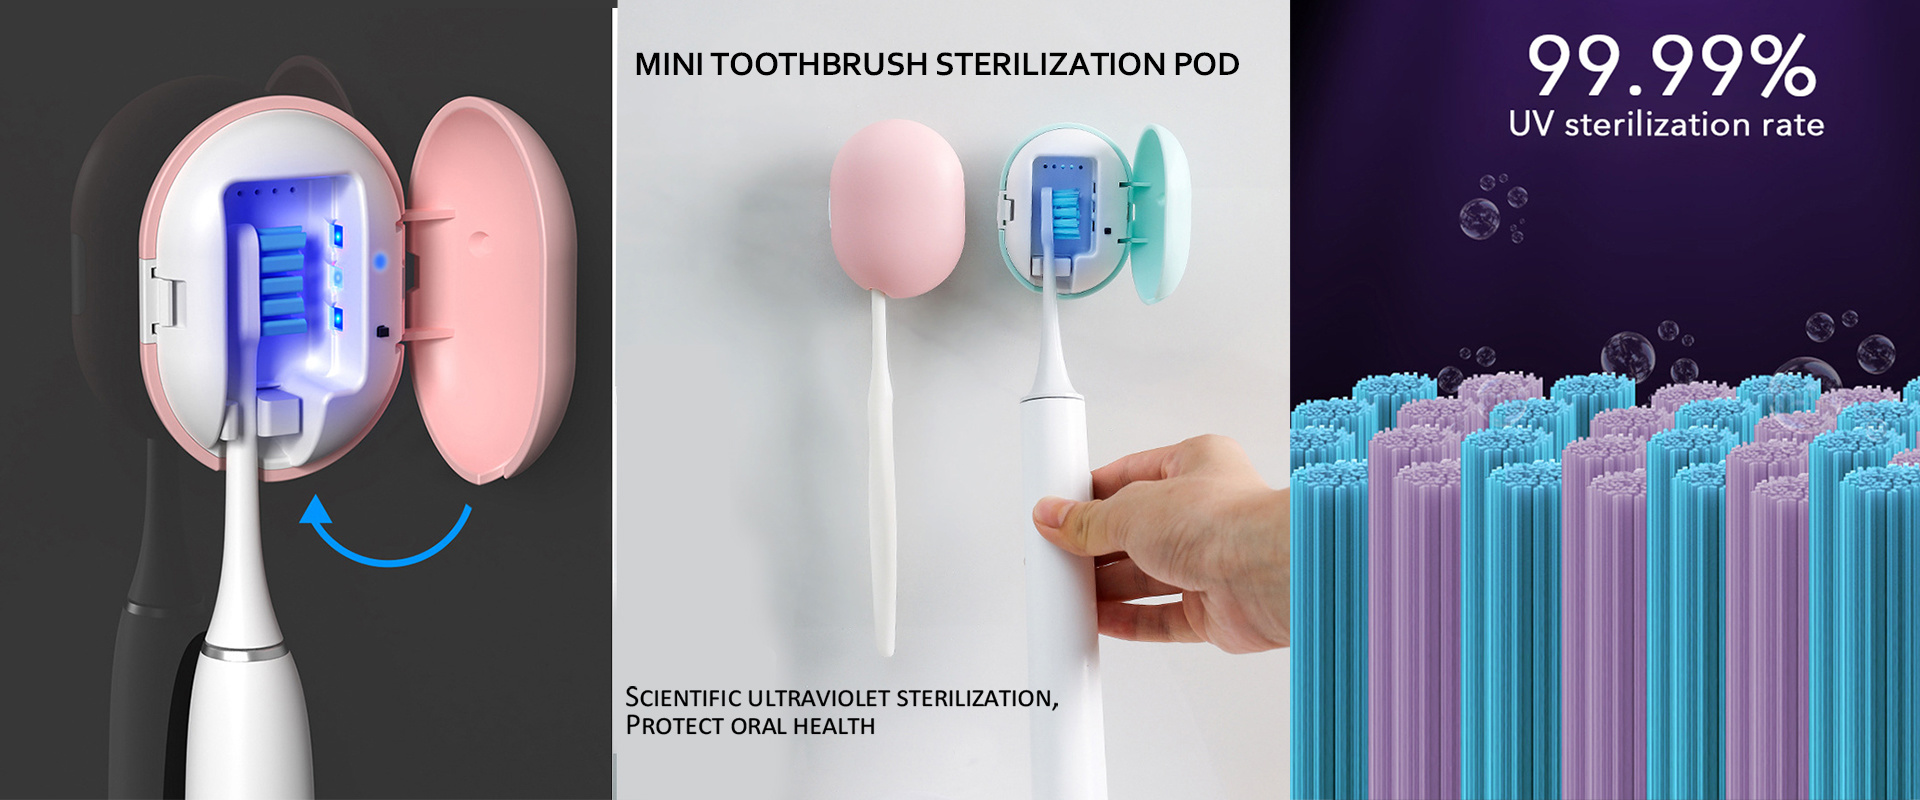 Toothbrush Sterilization Pod